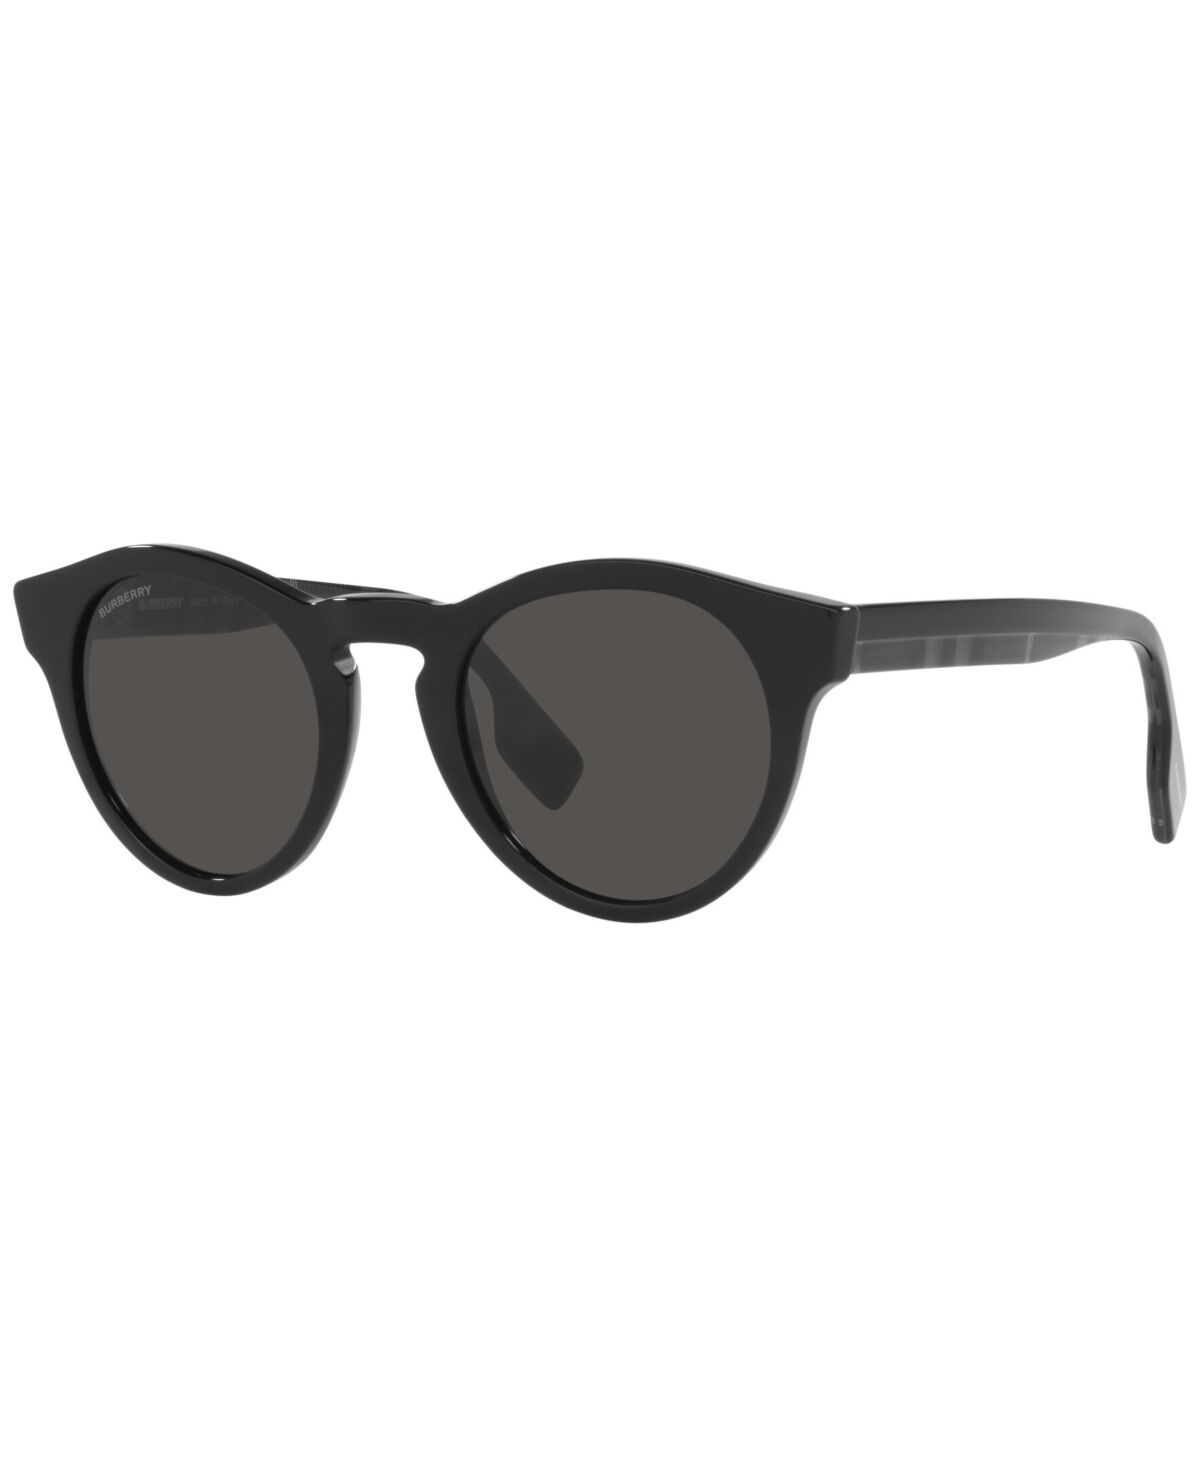 Burberry Men's Sunglasses, BE4359 Reid 49 - Black